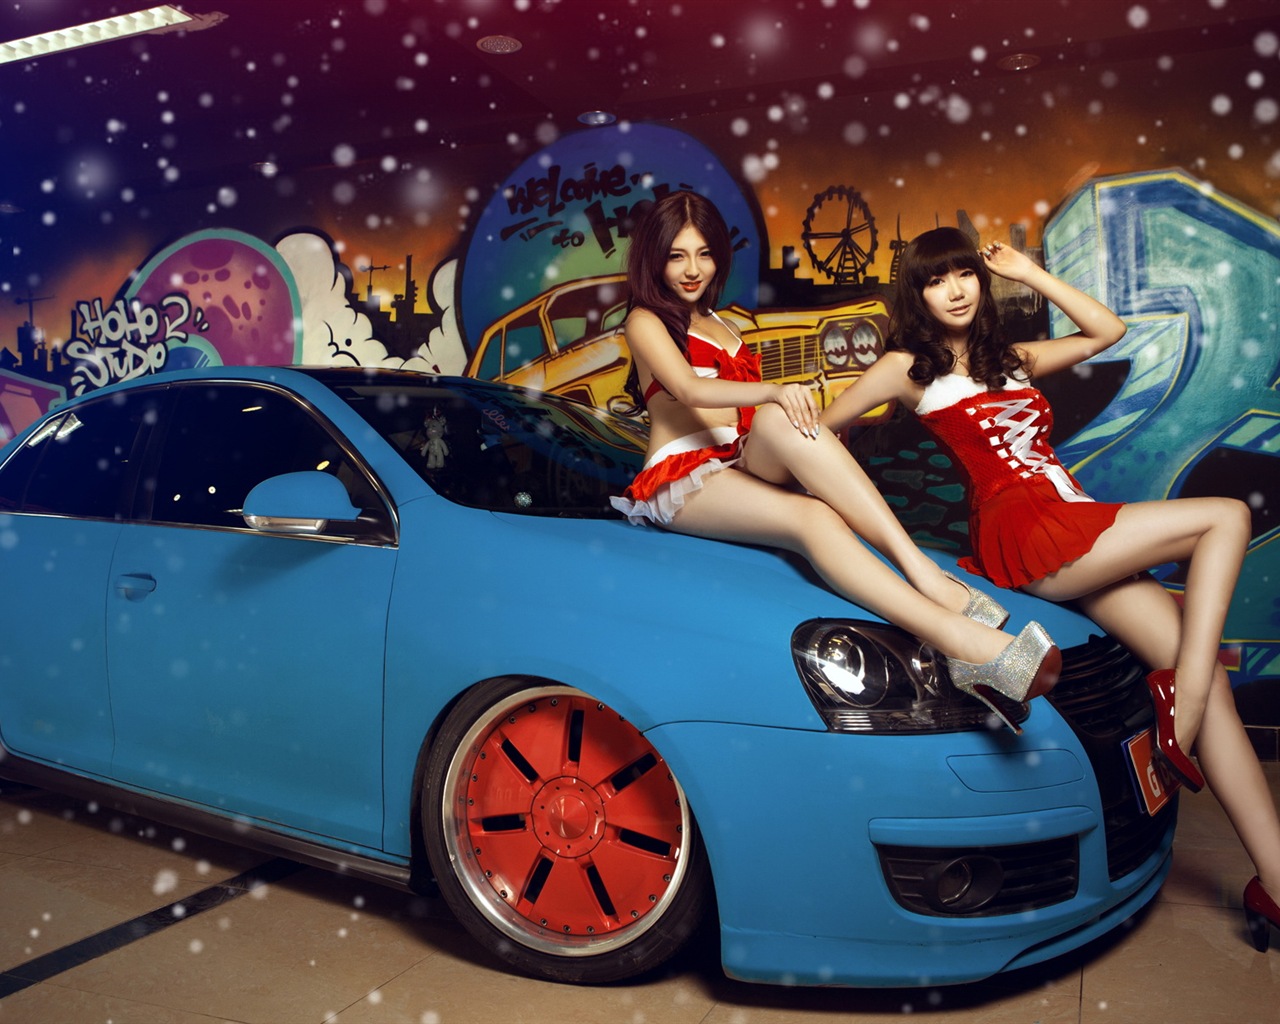 New Year festive red dress beautiful car models HD wallpapers #11 - 1280x1024